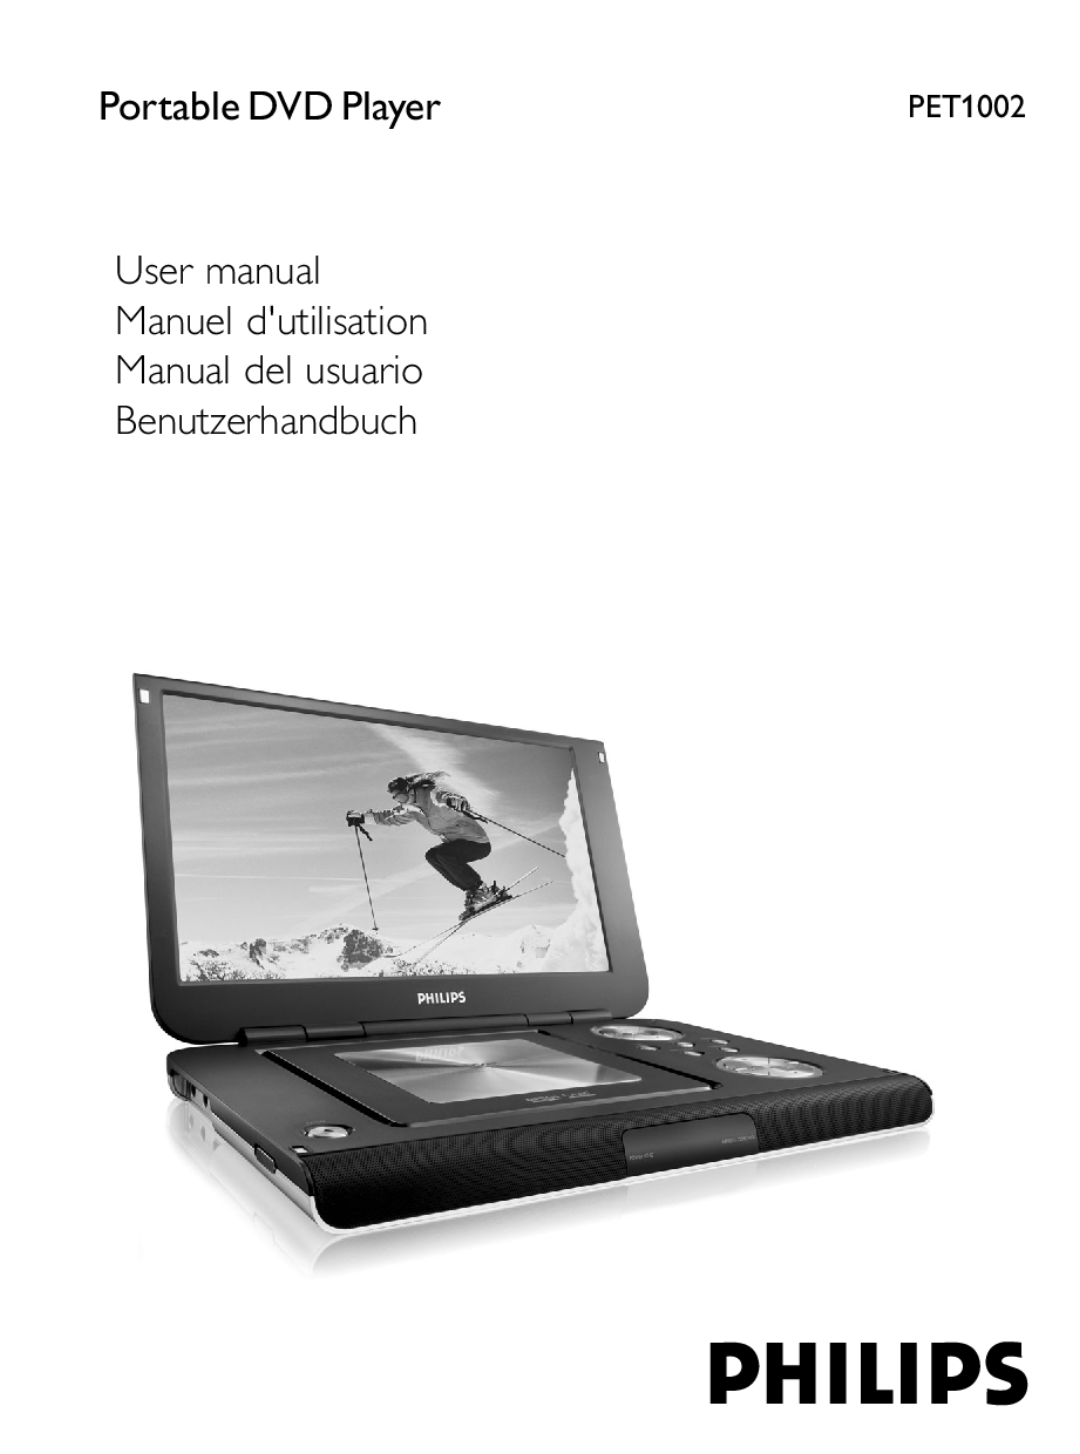 Philips PET1002 user manual Portable DVD Player, User manual Manuel dutilisation Manual del usuario Benutzerhandbuch 